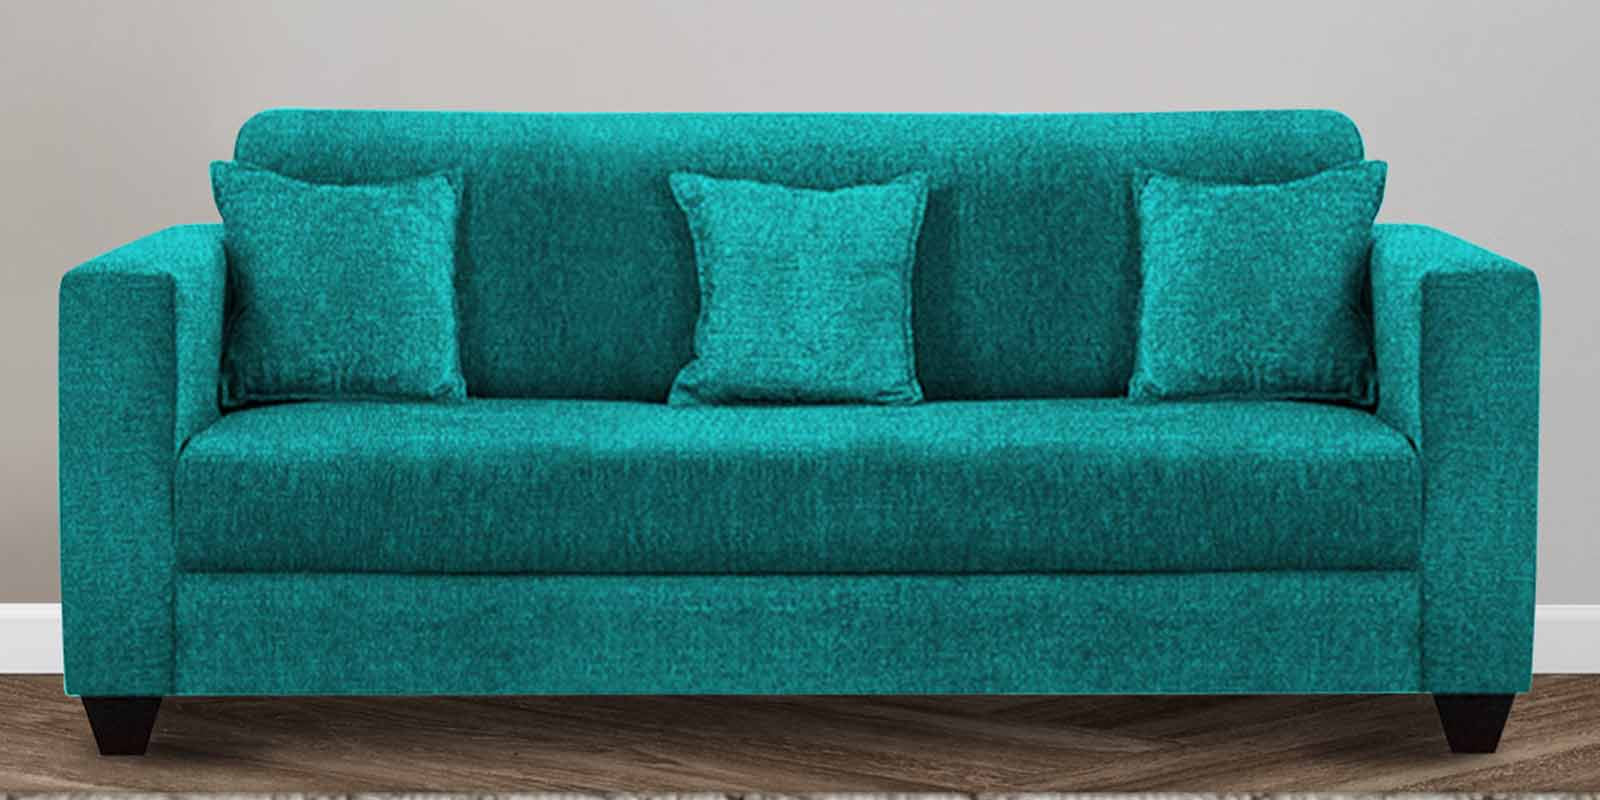 Nebula Fabric 3 Seater Sofa in Sea Green Colour